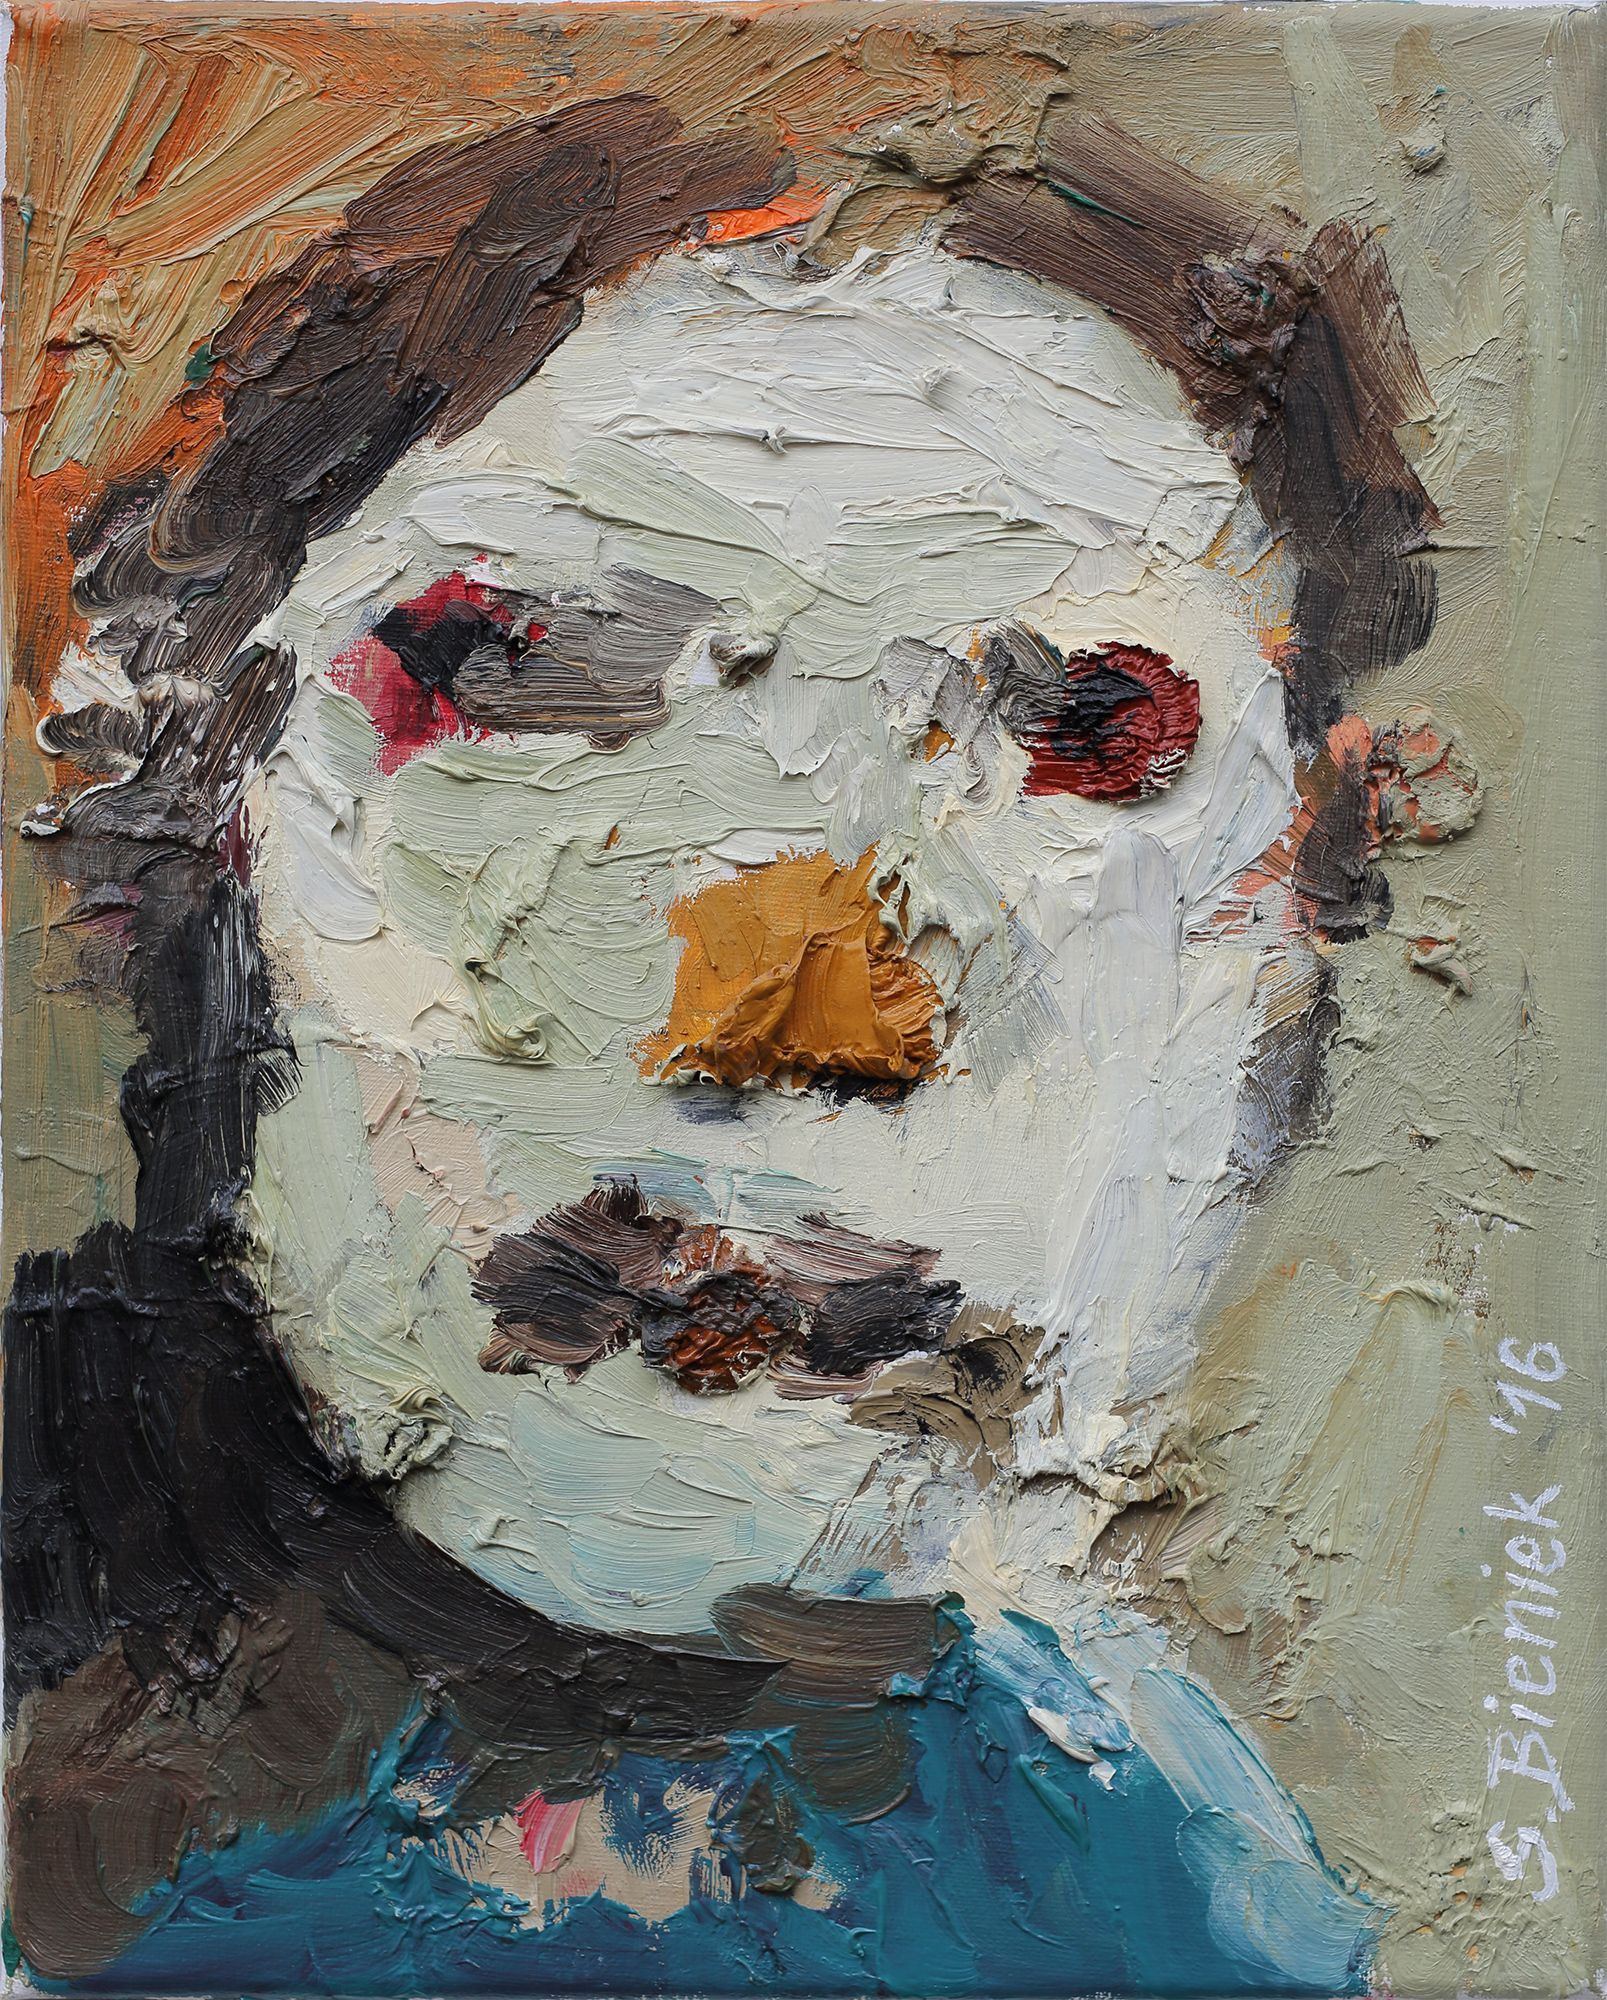 „Face no. 1“, by Sebastian Bieniek (B1EN1EK), 2016. Oil on canvas. 30 x 24 cm. From the 